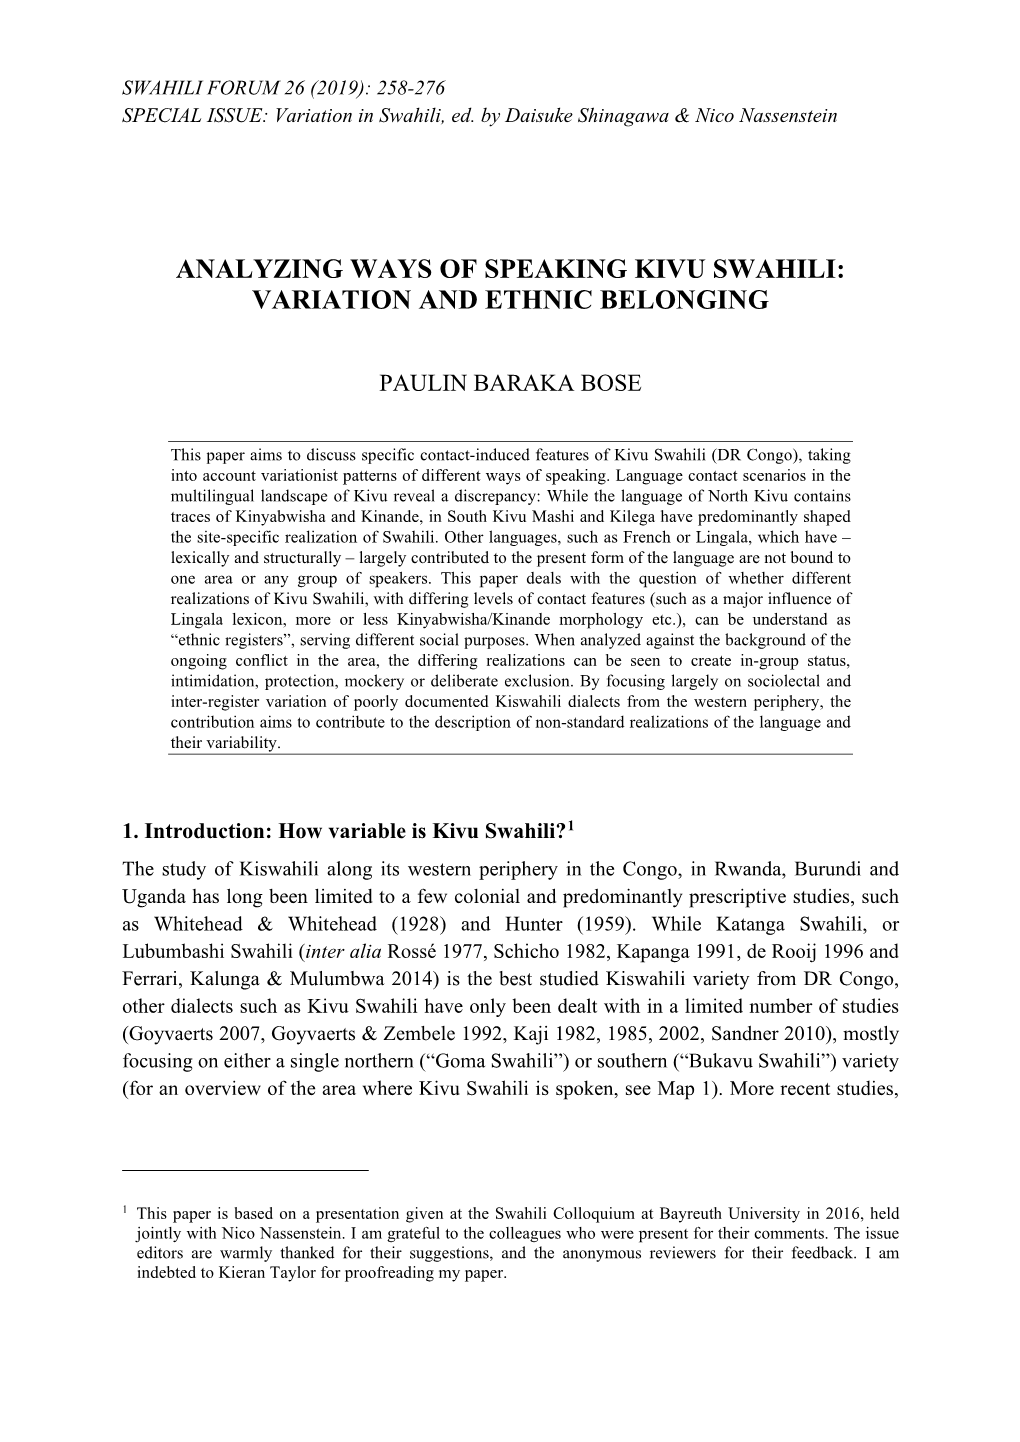 Analyzing Ways of Speaking Kivu Swahili: Variation and Ethnic Belonging